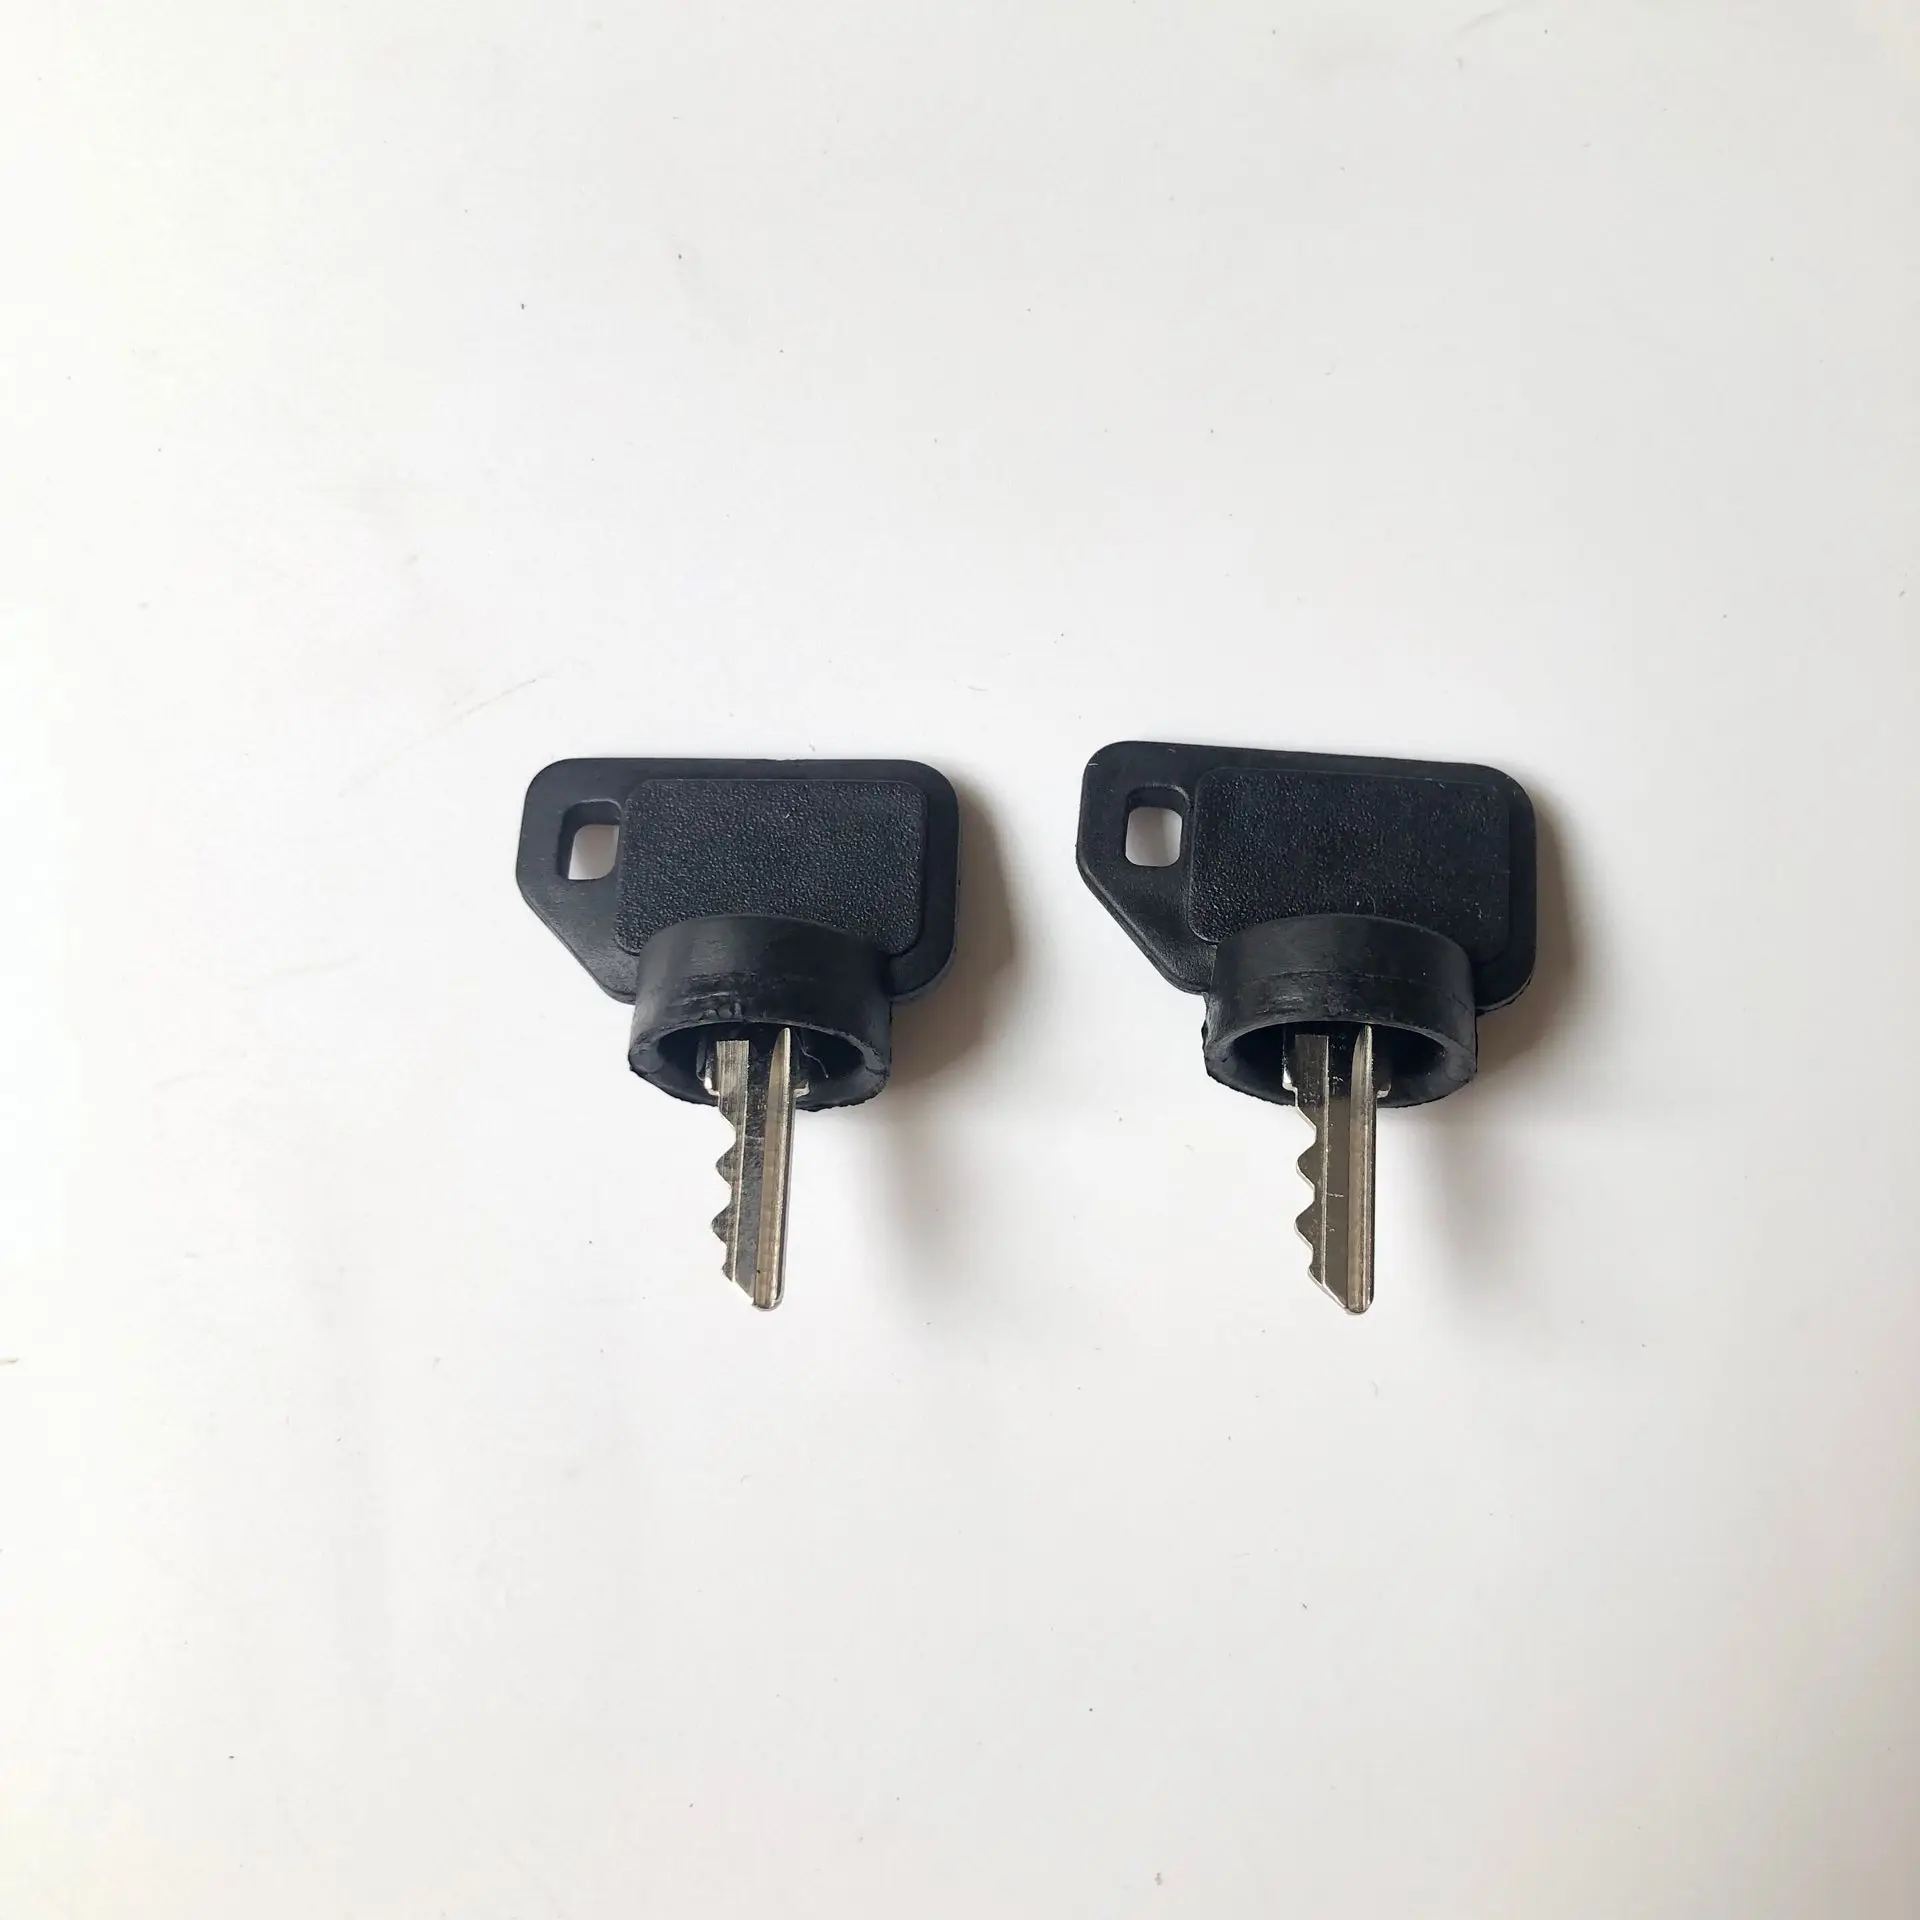 

2 x ключ переключателя подходит для цев Gravely 09287000 04331700 и карабина